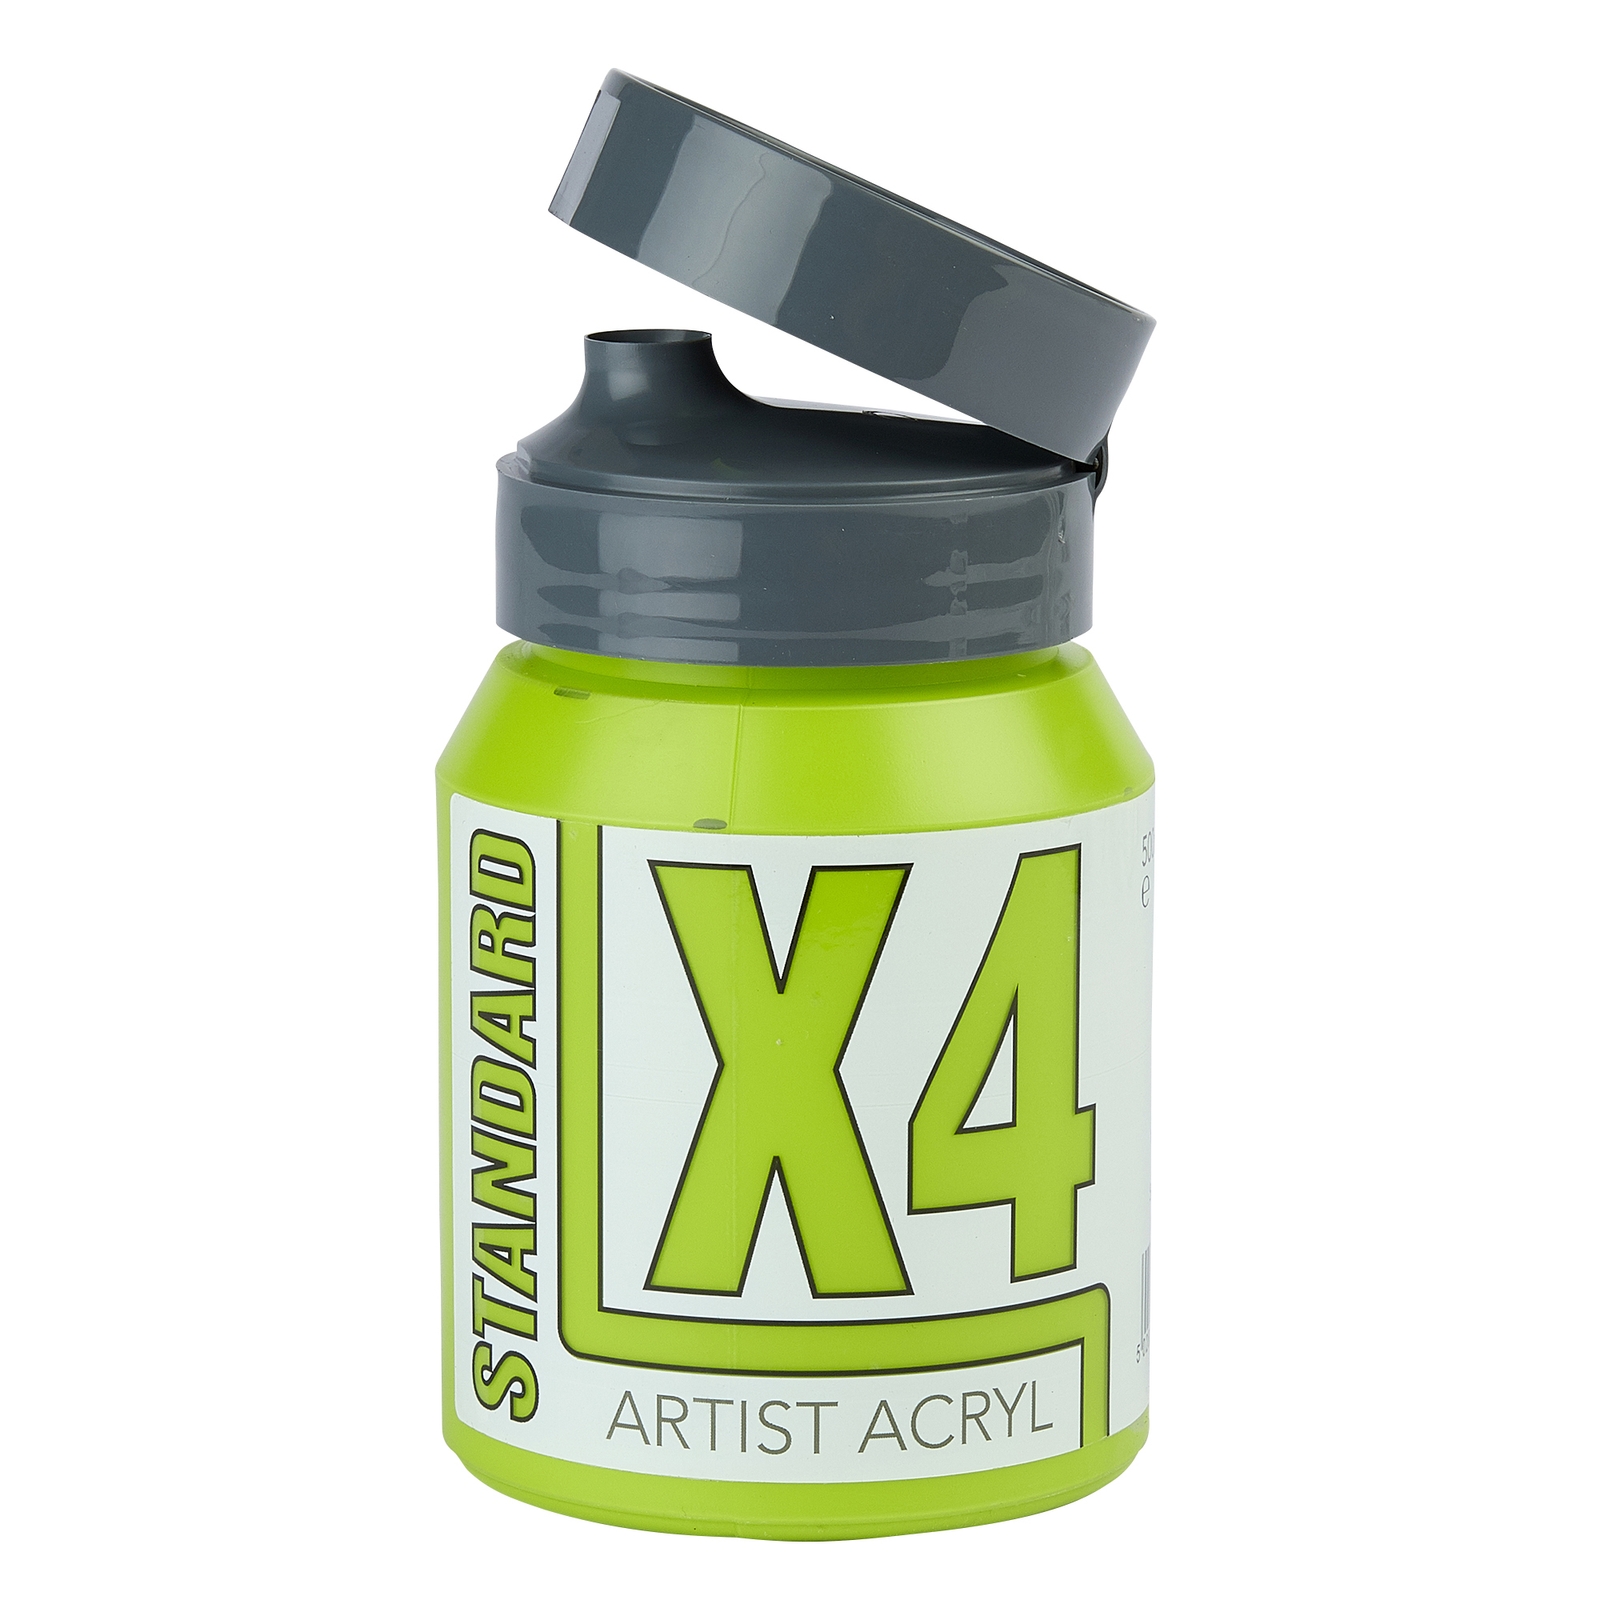 Specialist Crafts X4 Standard Yellow Green Acryl/Acrylic Paint - 500ml - Each